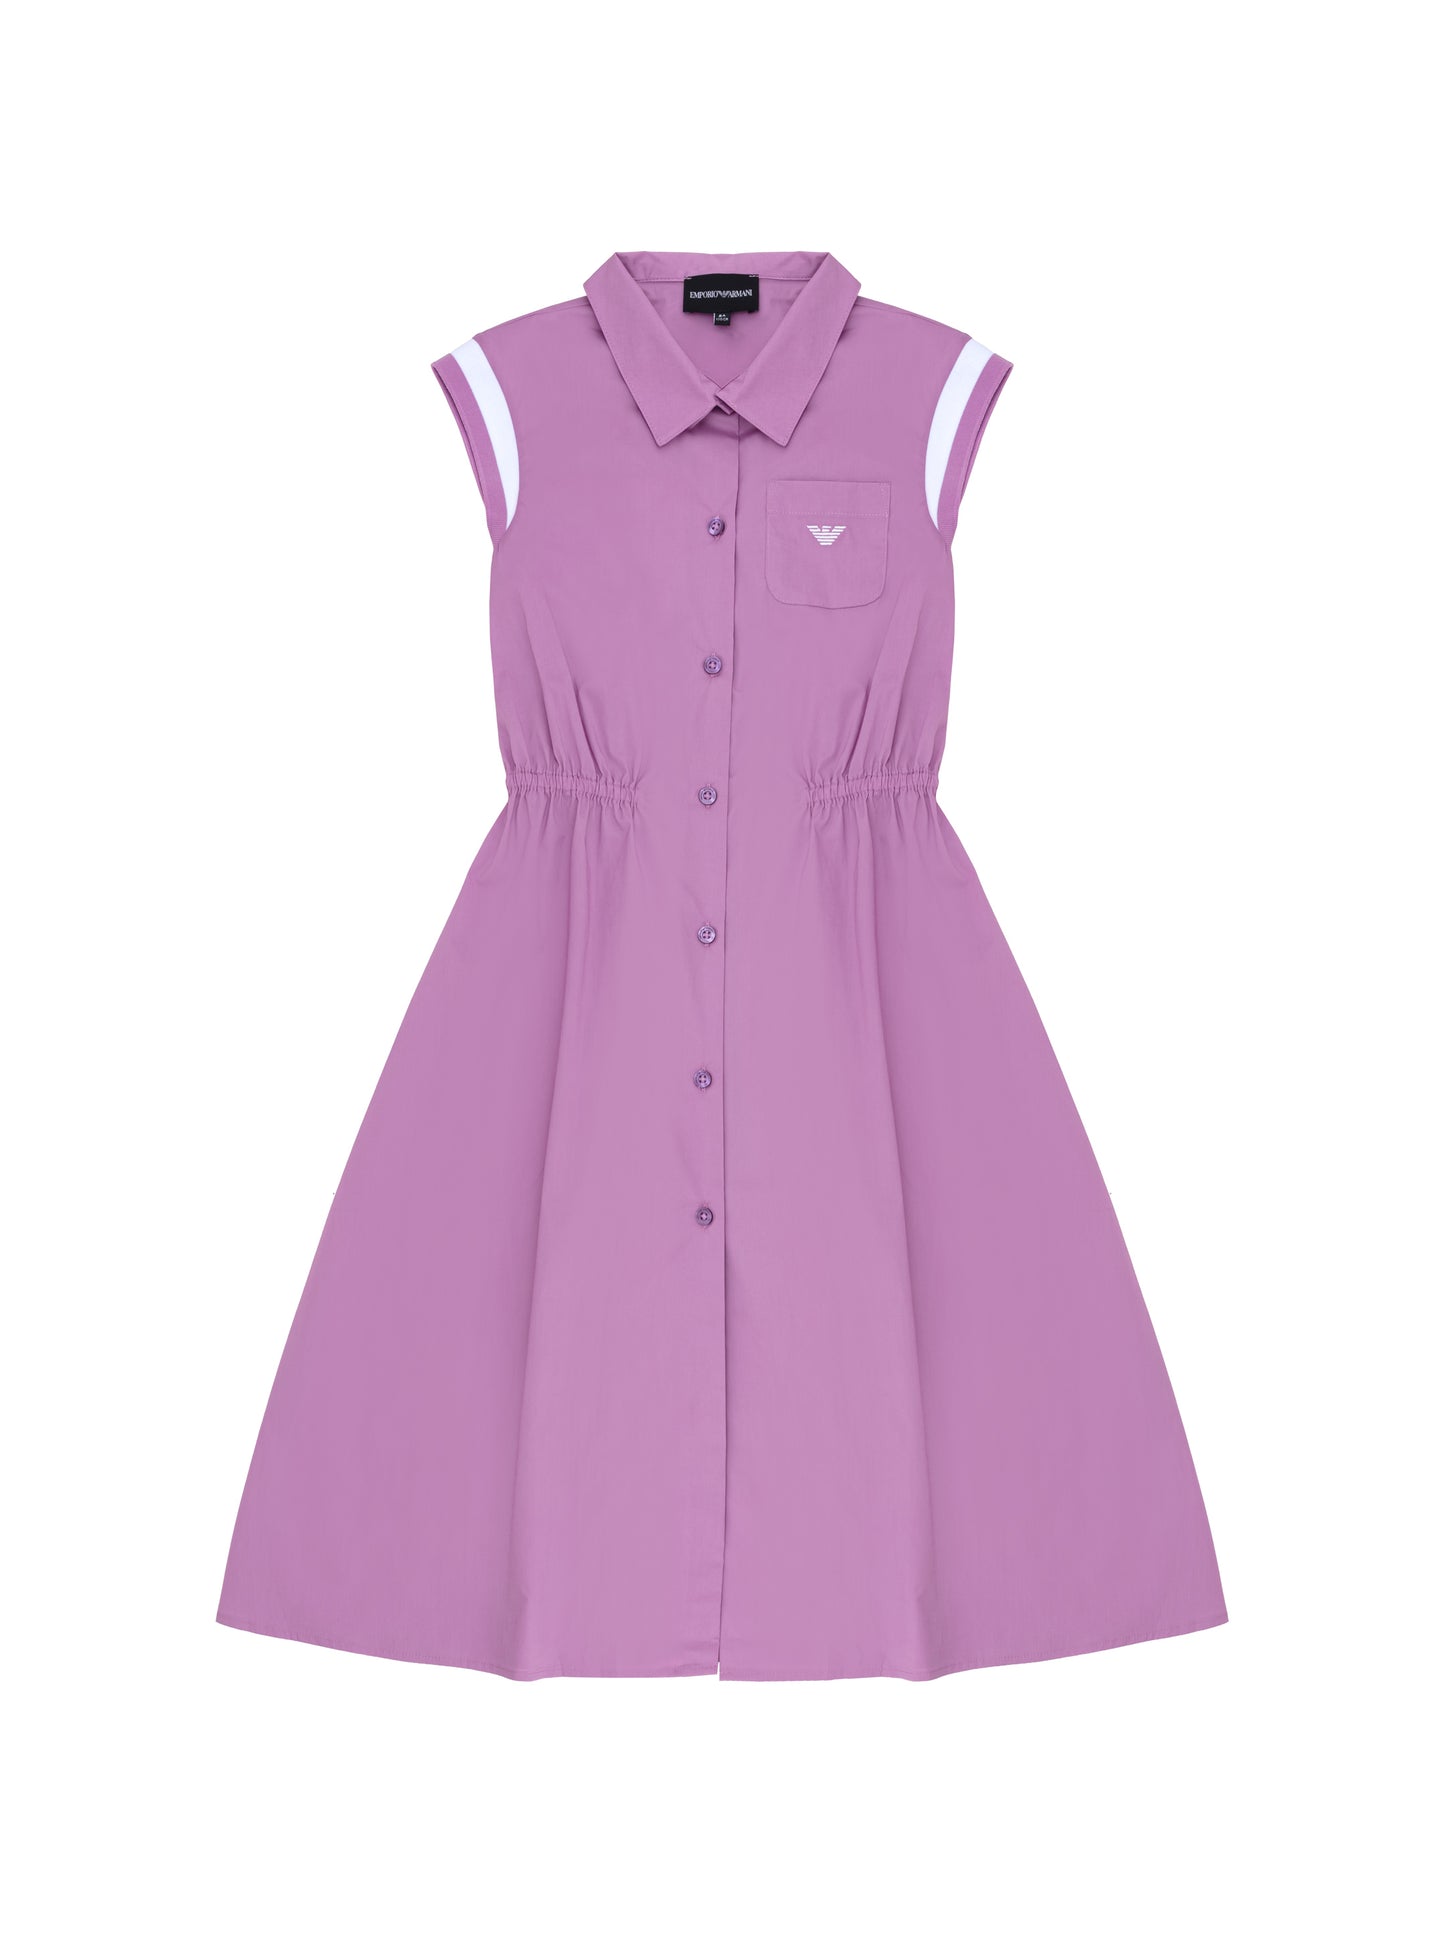 Armani Junior Girls Sleeveless Collared Dress w/ Front Pocket